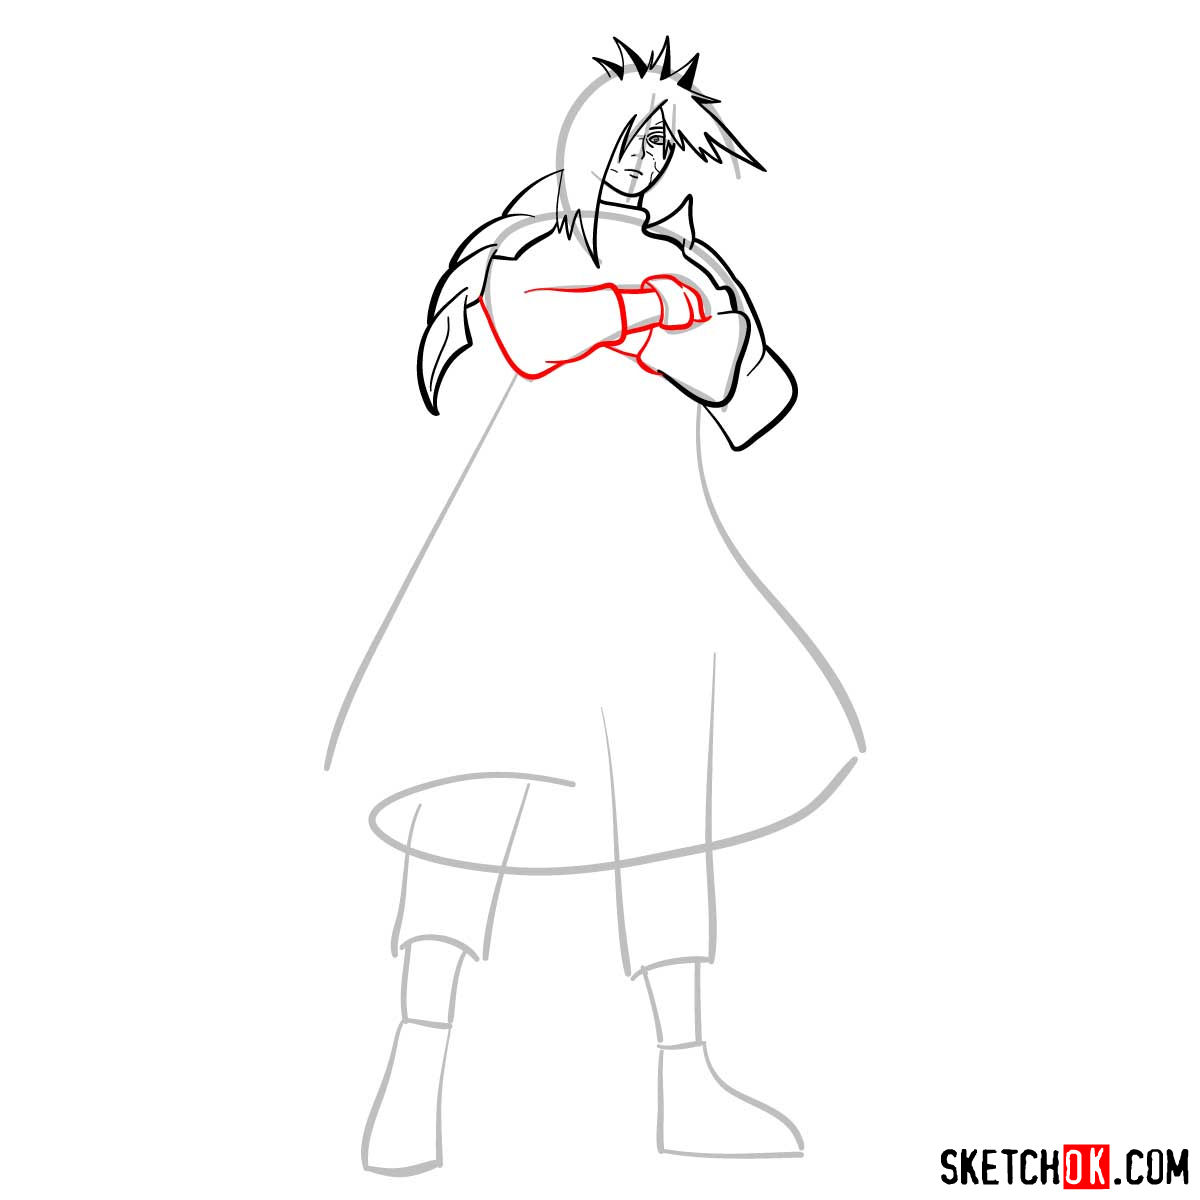 How to draw Madara Uchiha from Naruto anime - step 08